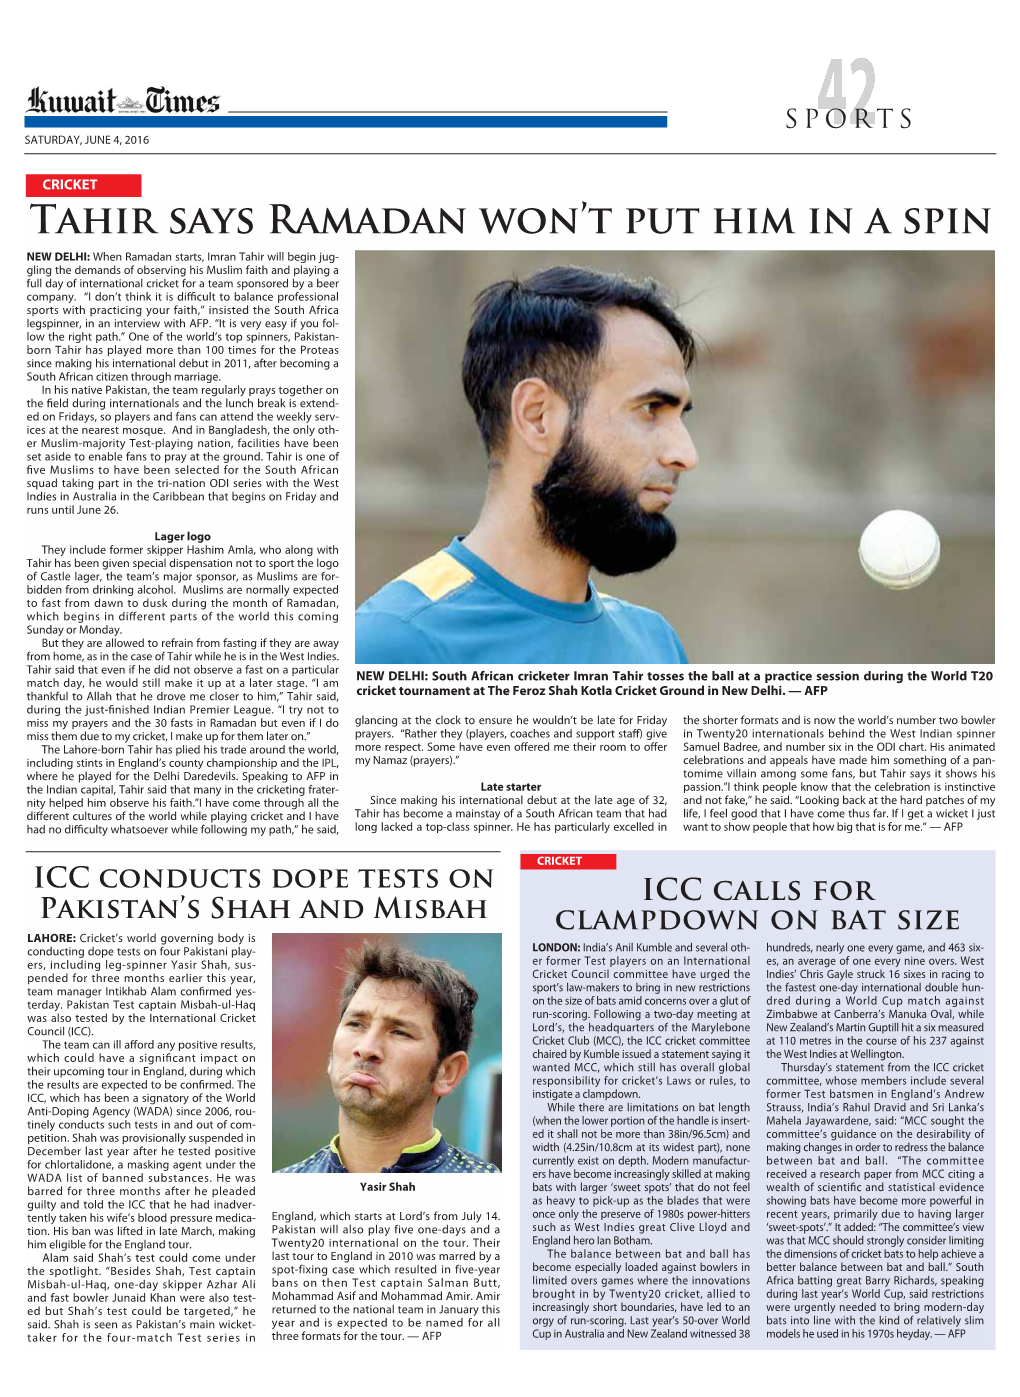 Tahir Says Ramadan Won't Put Him in a Spin